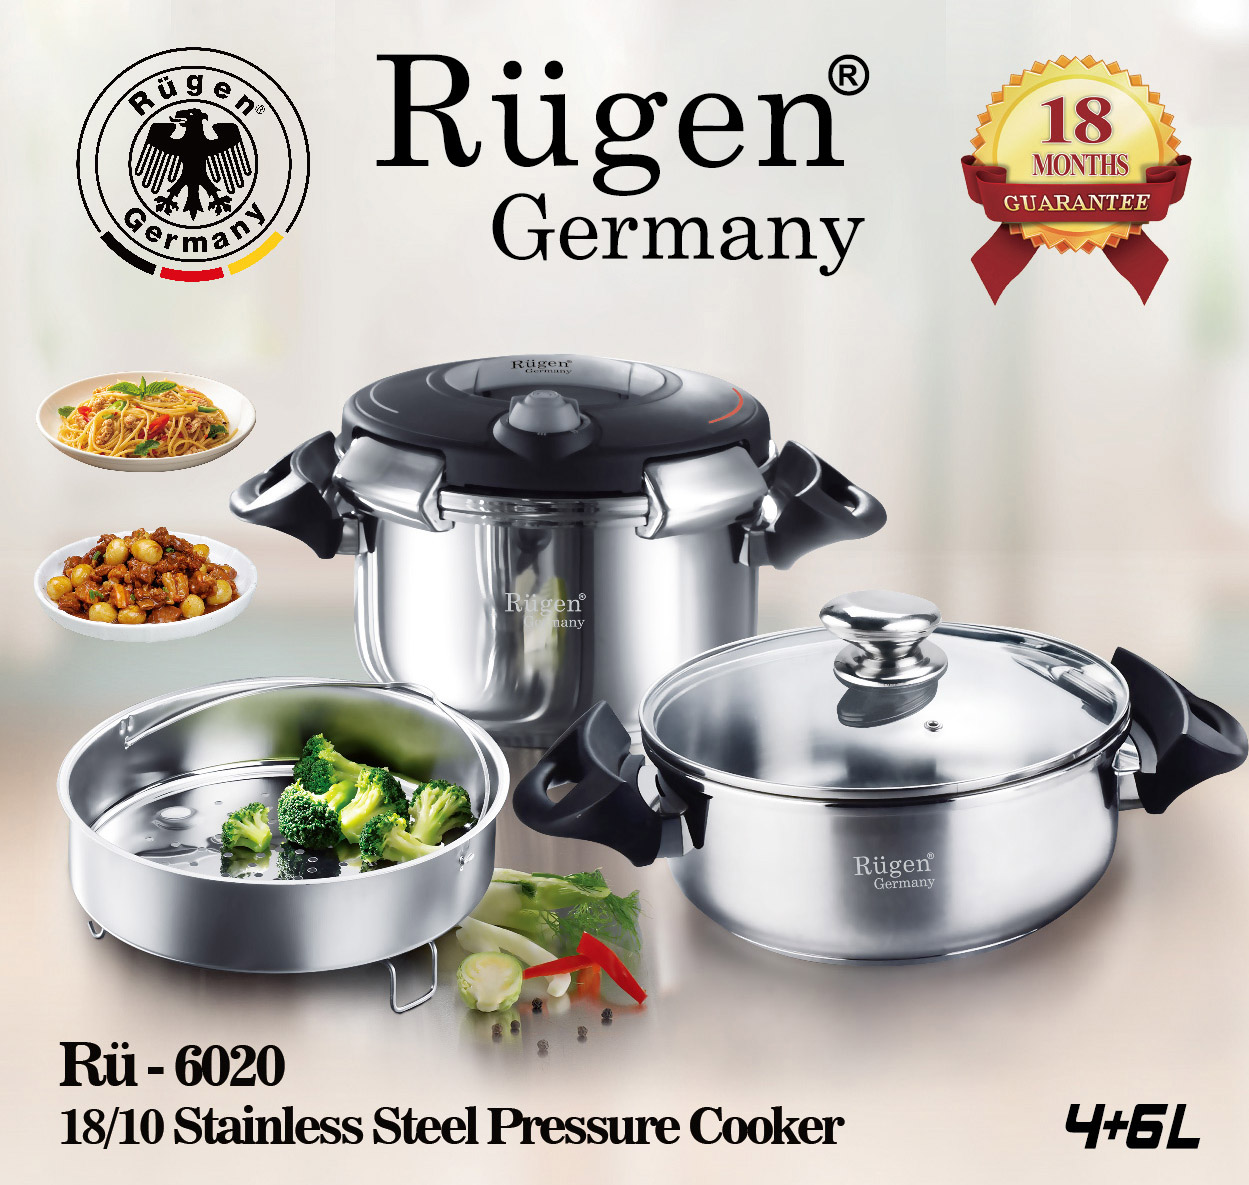 مشخصات زودپز روگازی دوقلو روگن مدل Rugen twin Pressure cooker Ru-6020